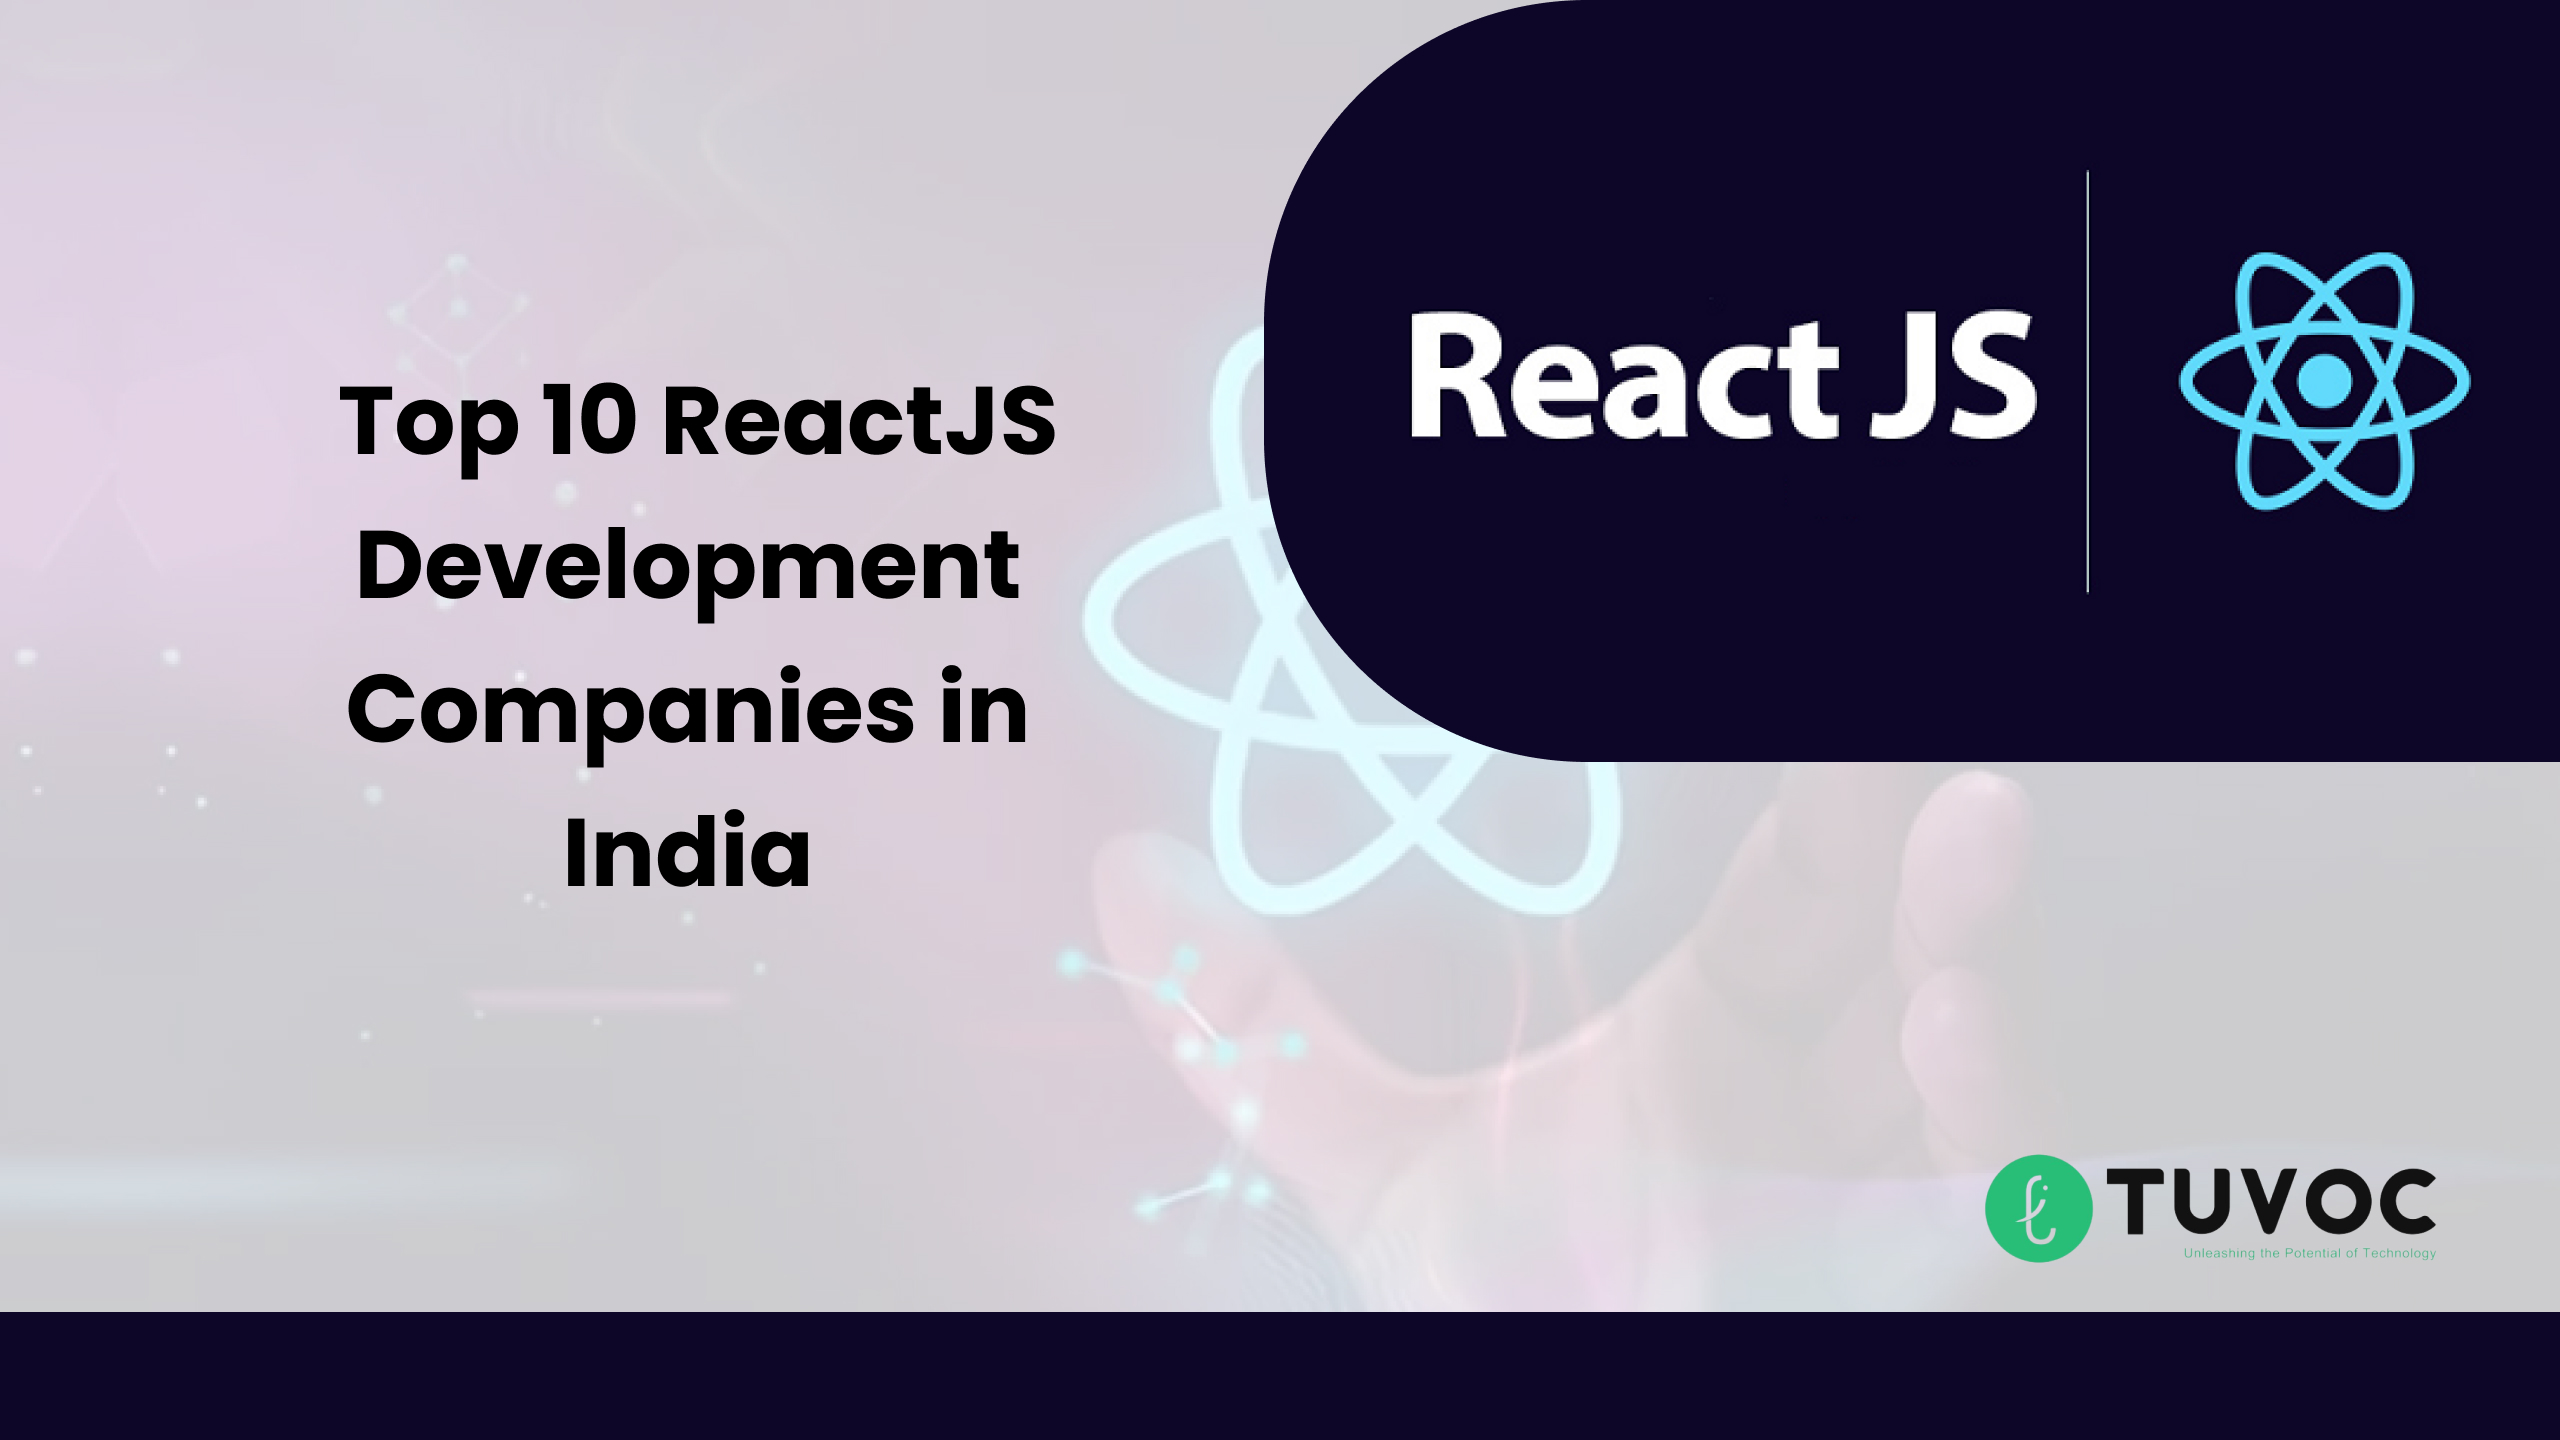 Top 10 ReactJS Development Companies in India